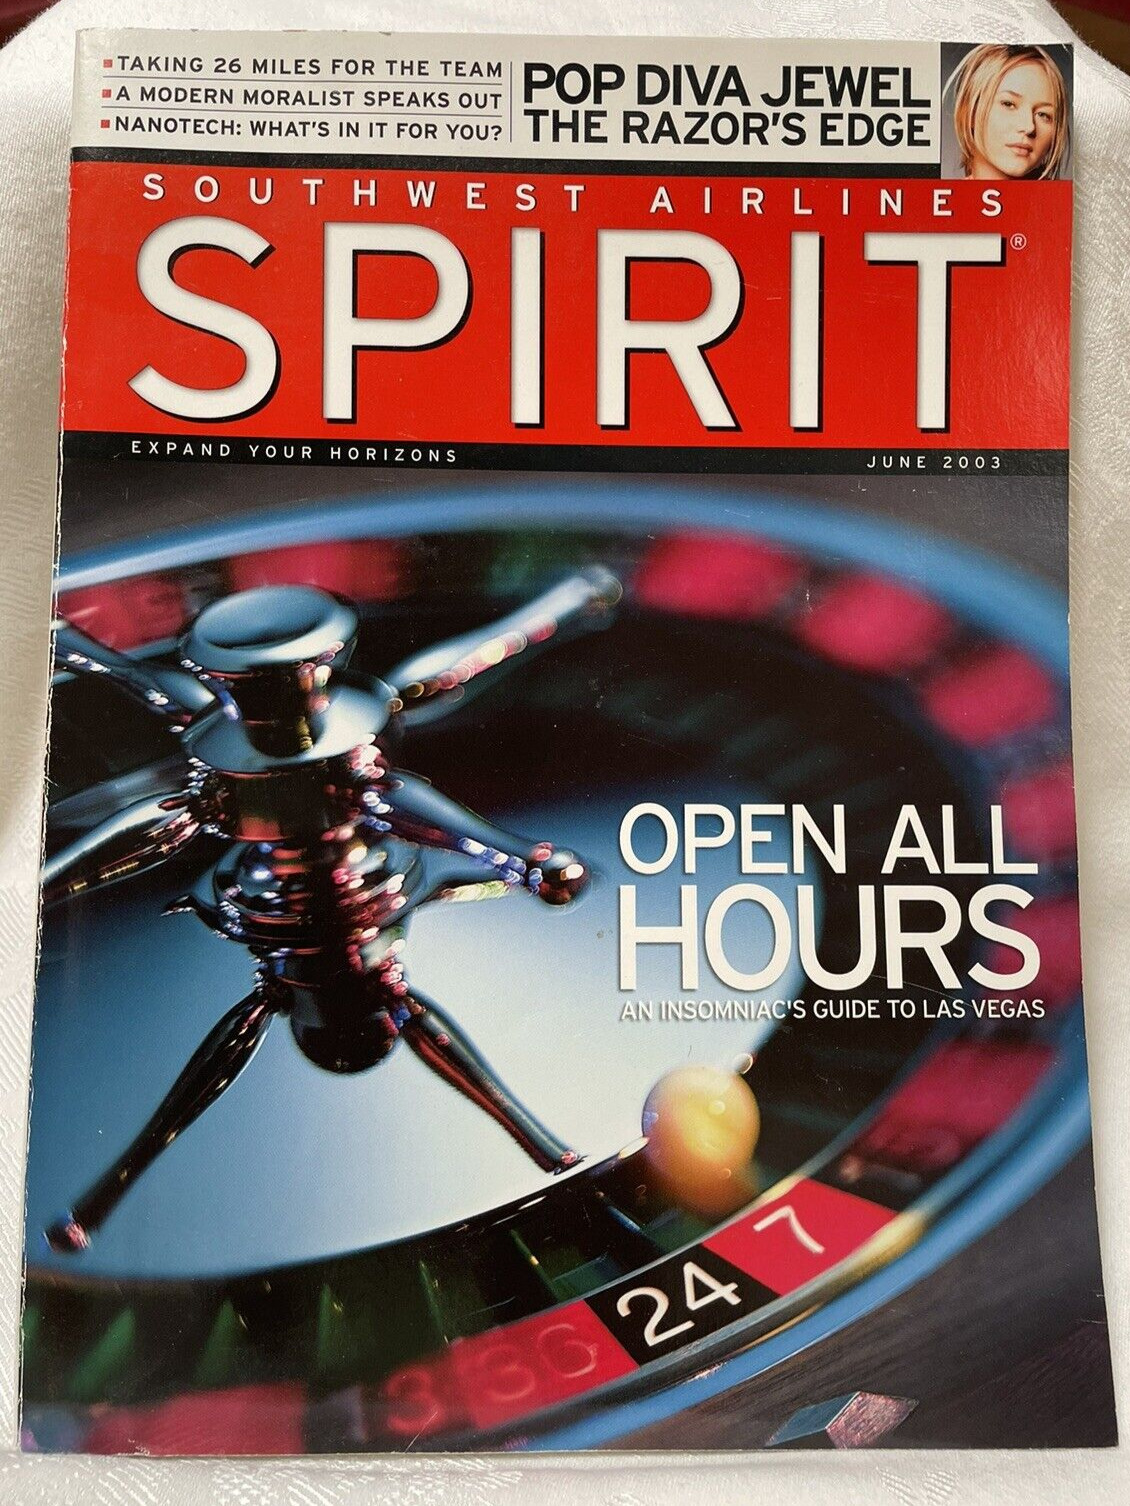 Southwest Airlines Spirit Magazine June 2003 Pop Diva Jewel, Las Vegas, NanoTech